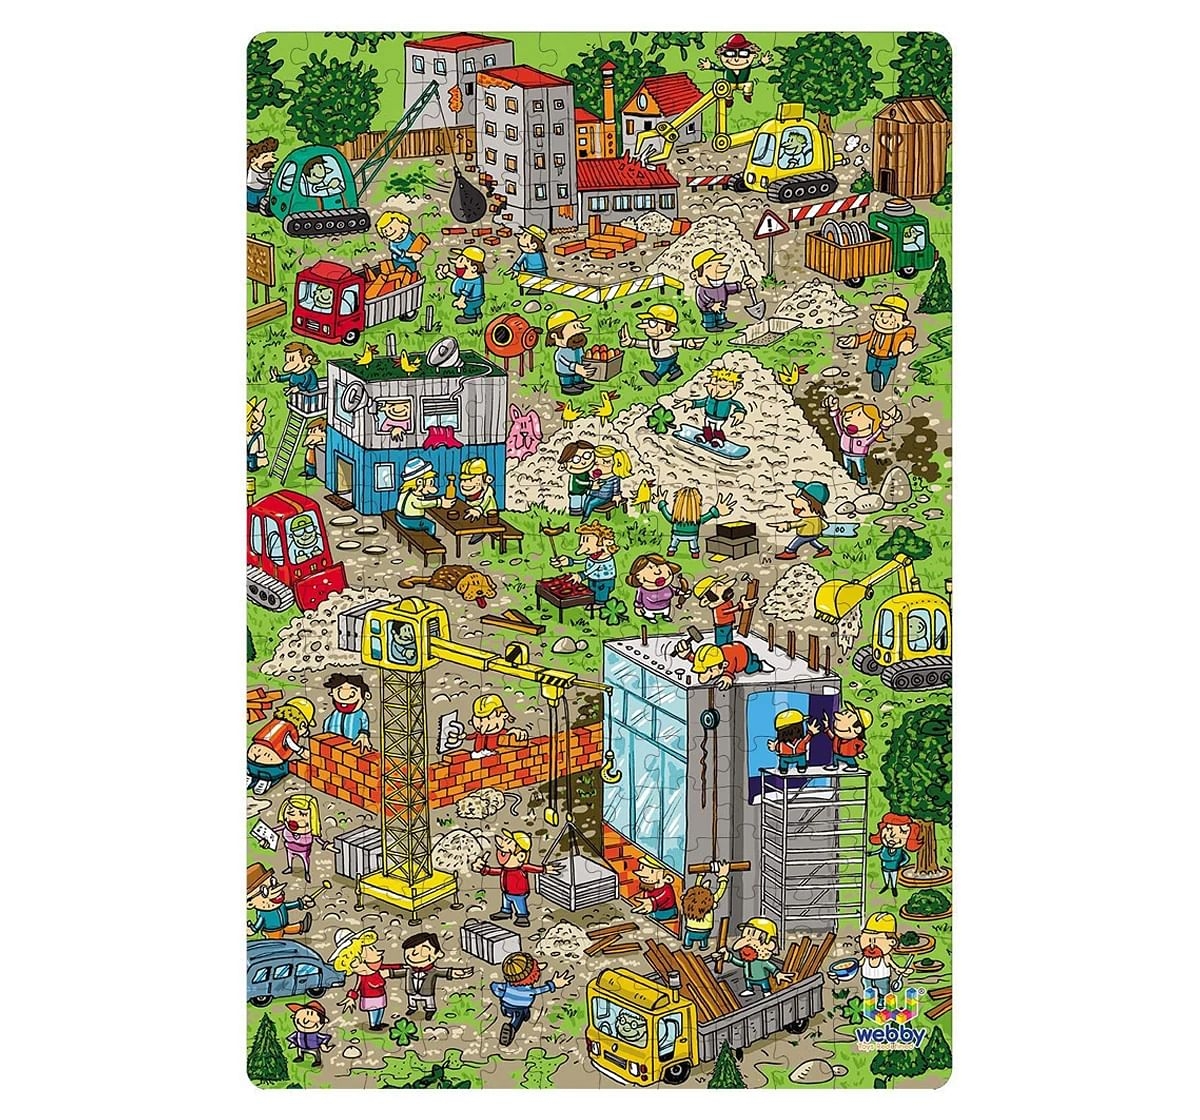 Webby Farm Family Wooden Jigsaw Puzzle, 24pcs, Multicolor – Webby Toys